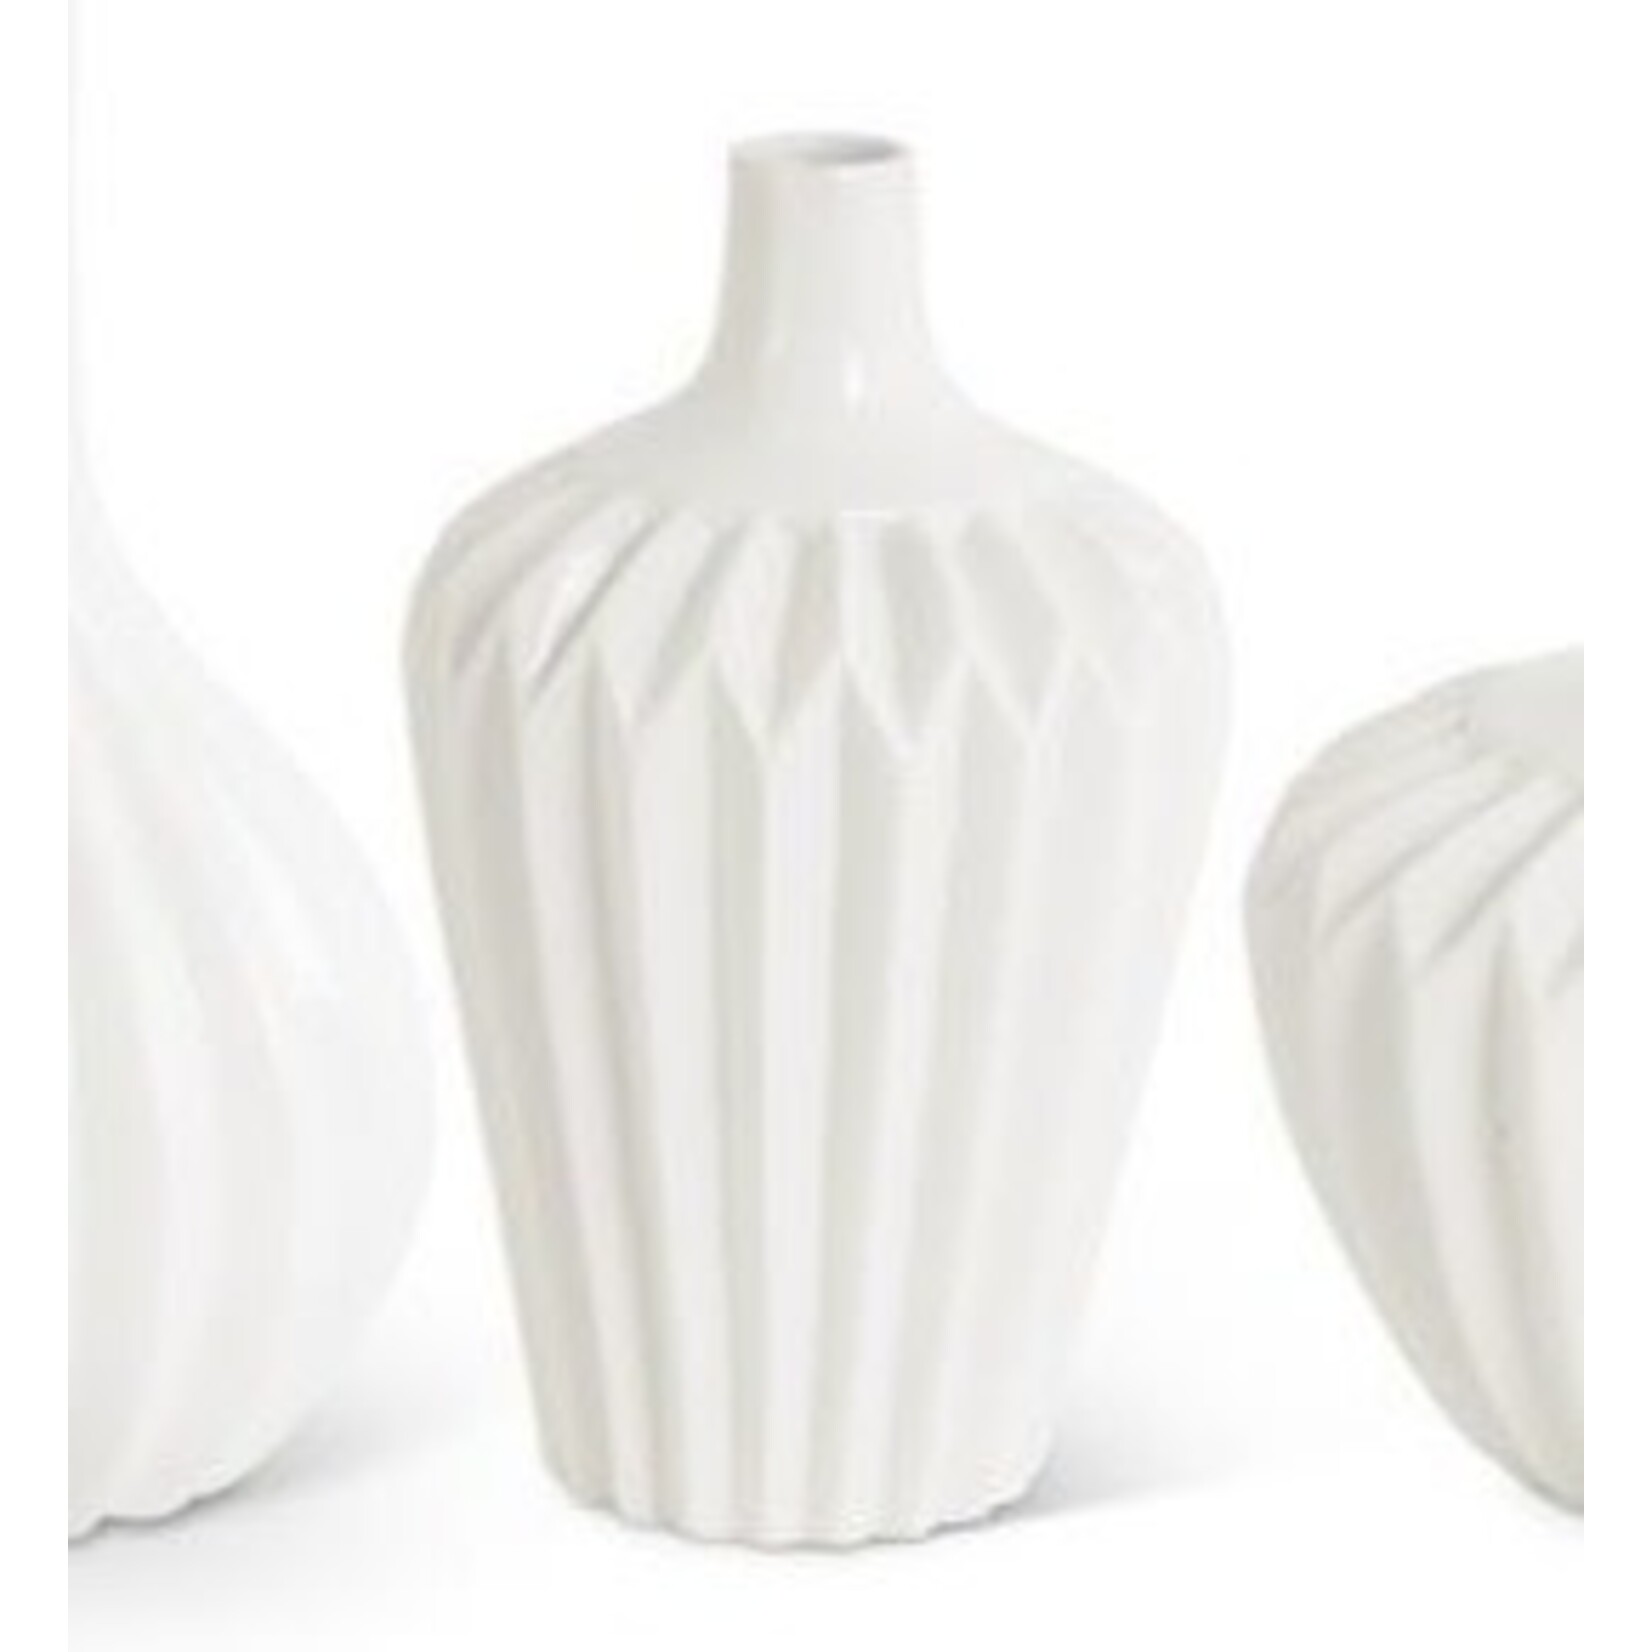 7.75 Inch White Porcelian Accordion Vase